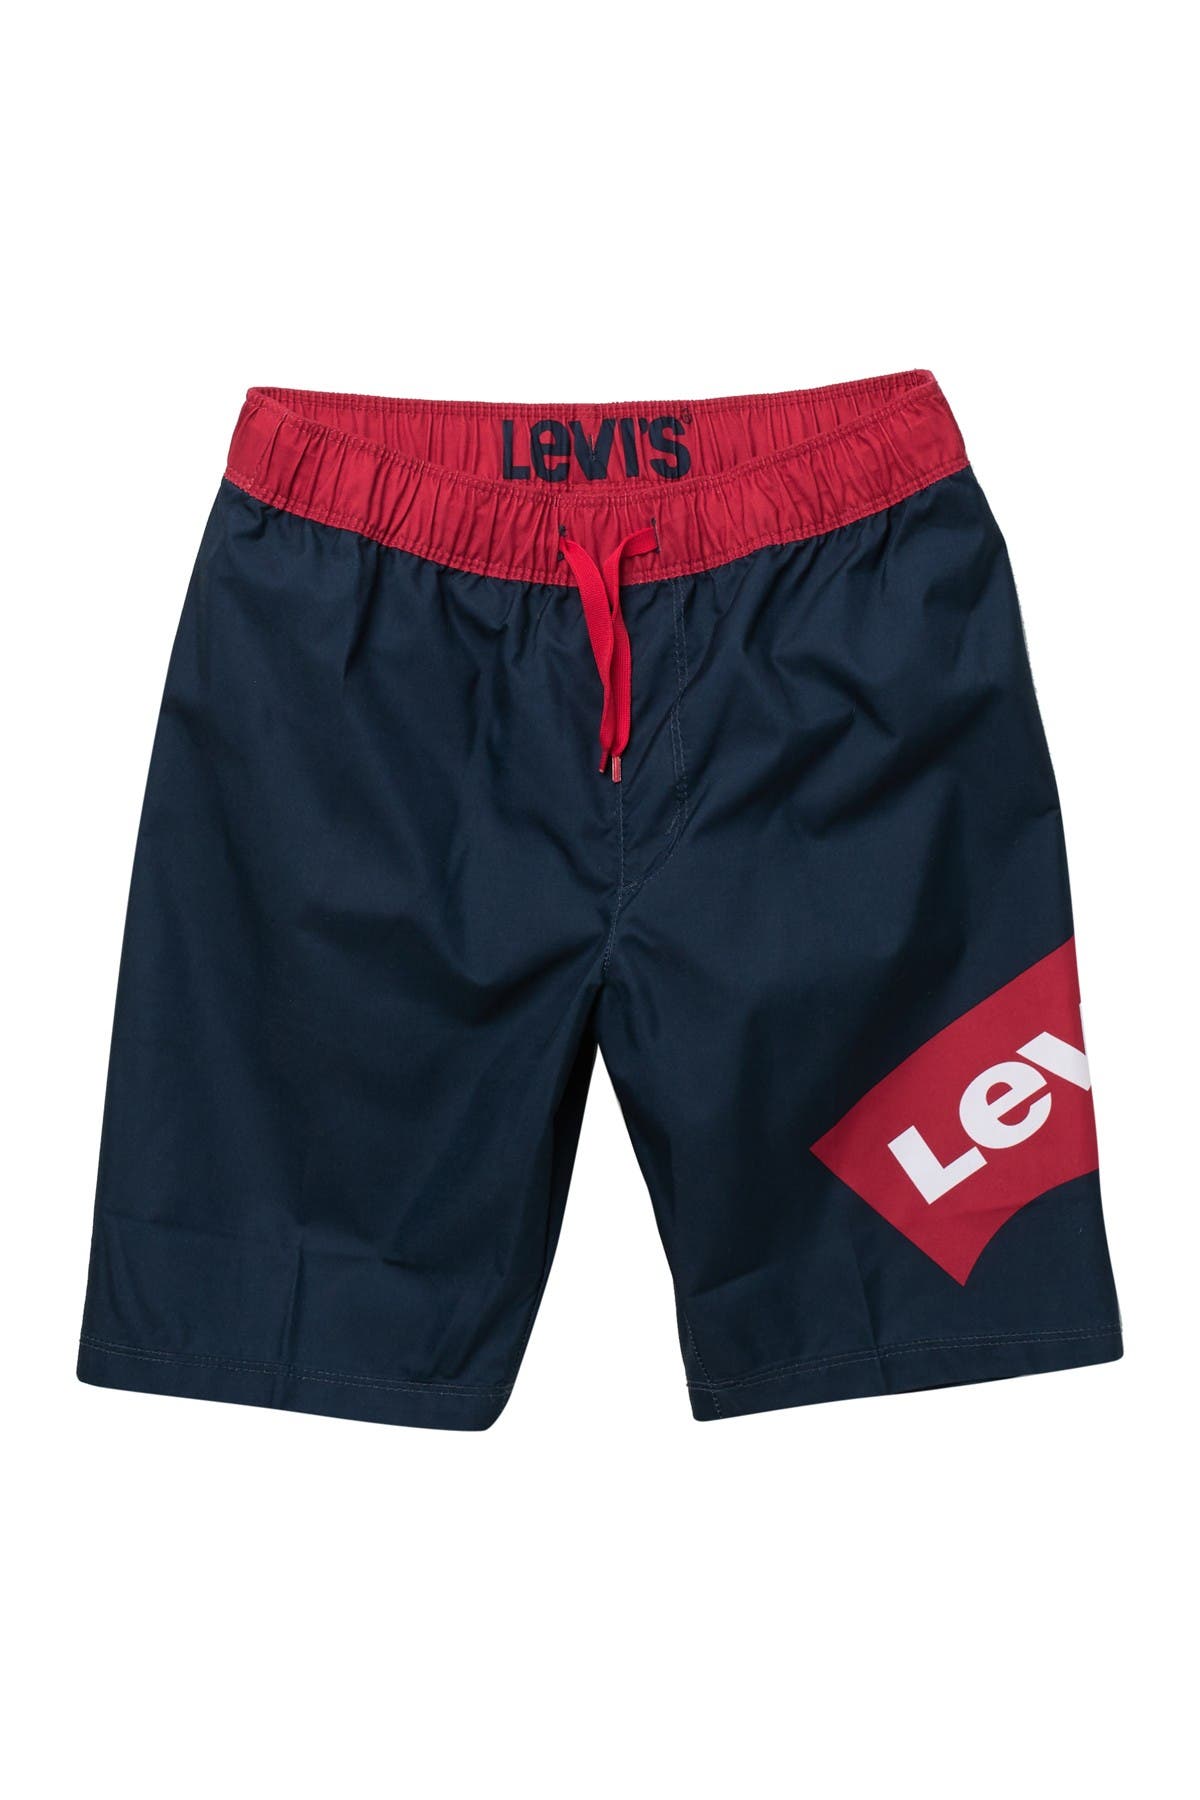 levis swim shorts